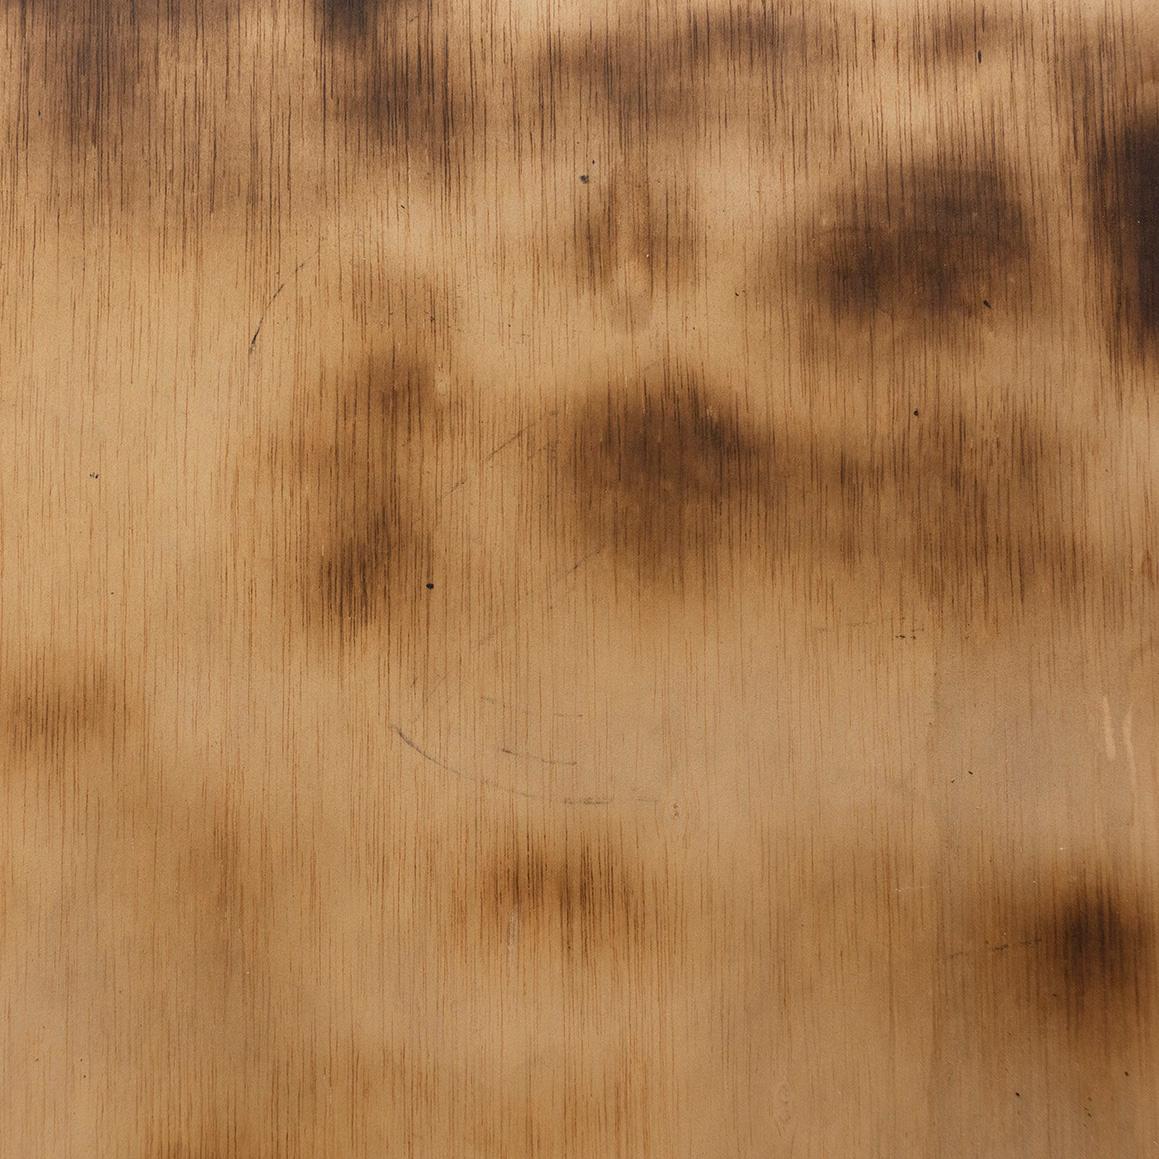 Ramon dels Horts Contemporary Artwork Burned Wood, circa 2018 For Sale 3